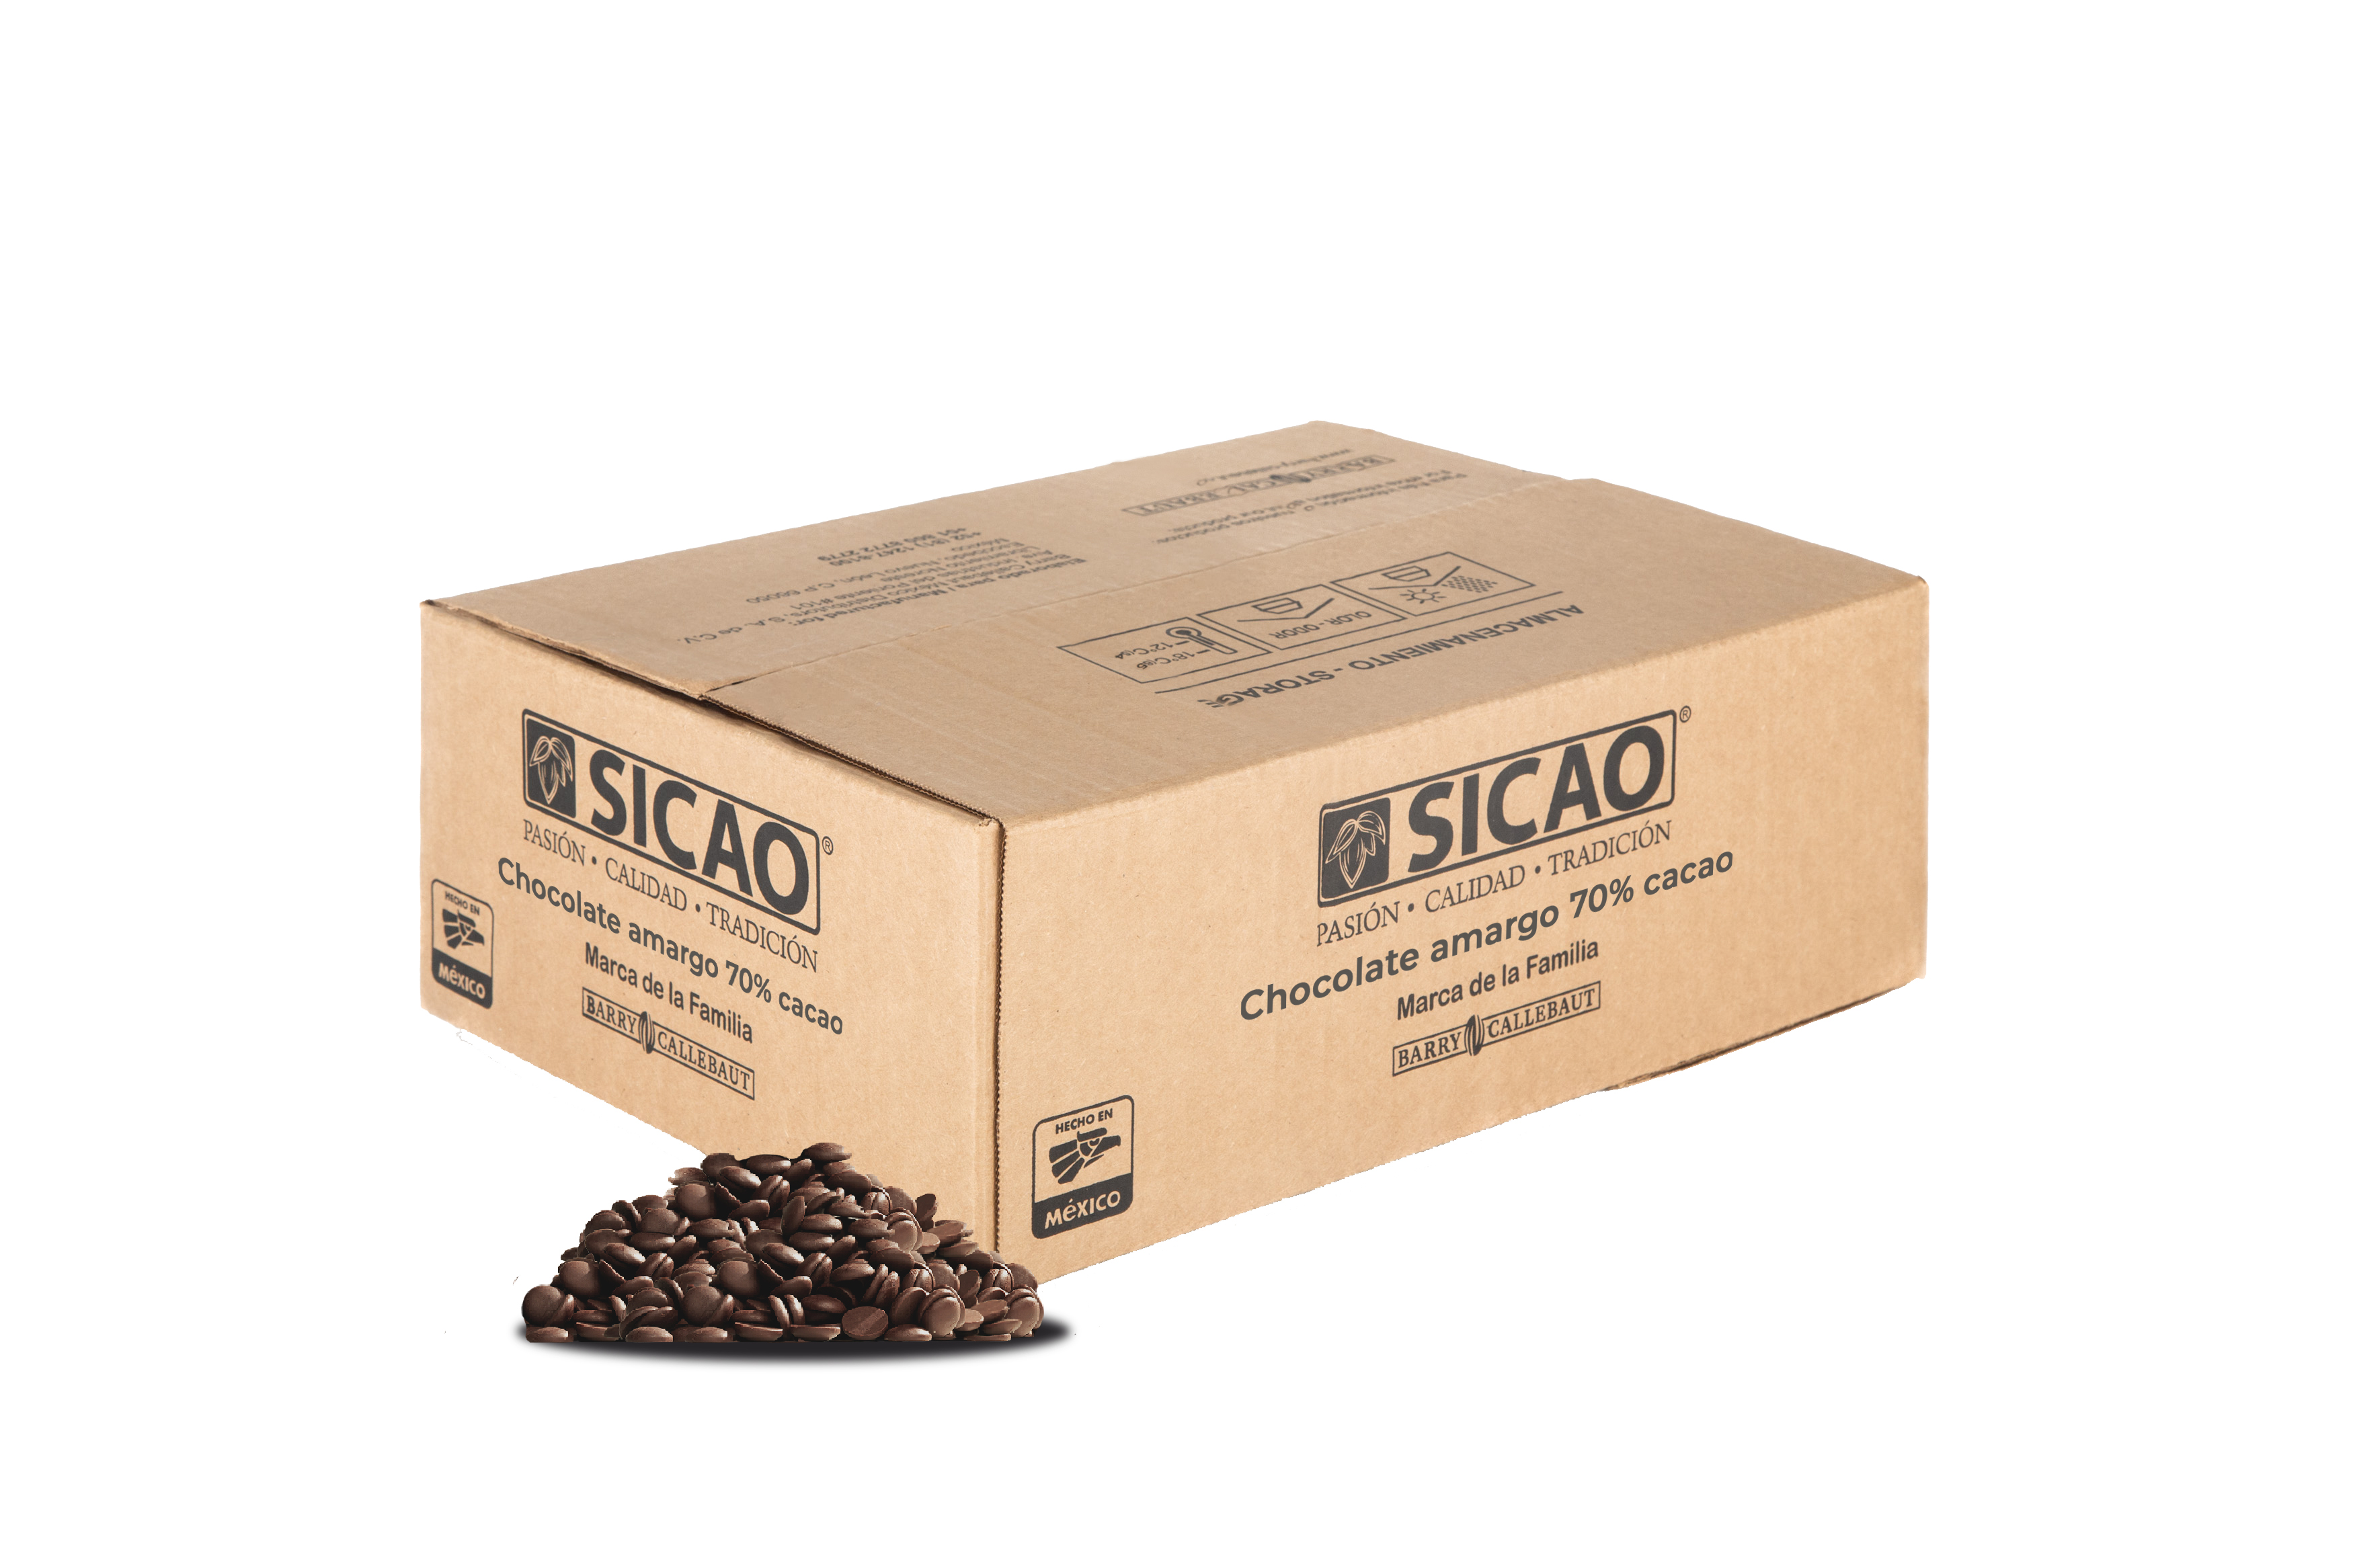 Chocolate - Chocolate amargo - 70% Cacao - Wafers - Caja 10 kg